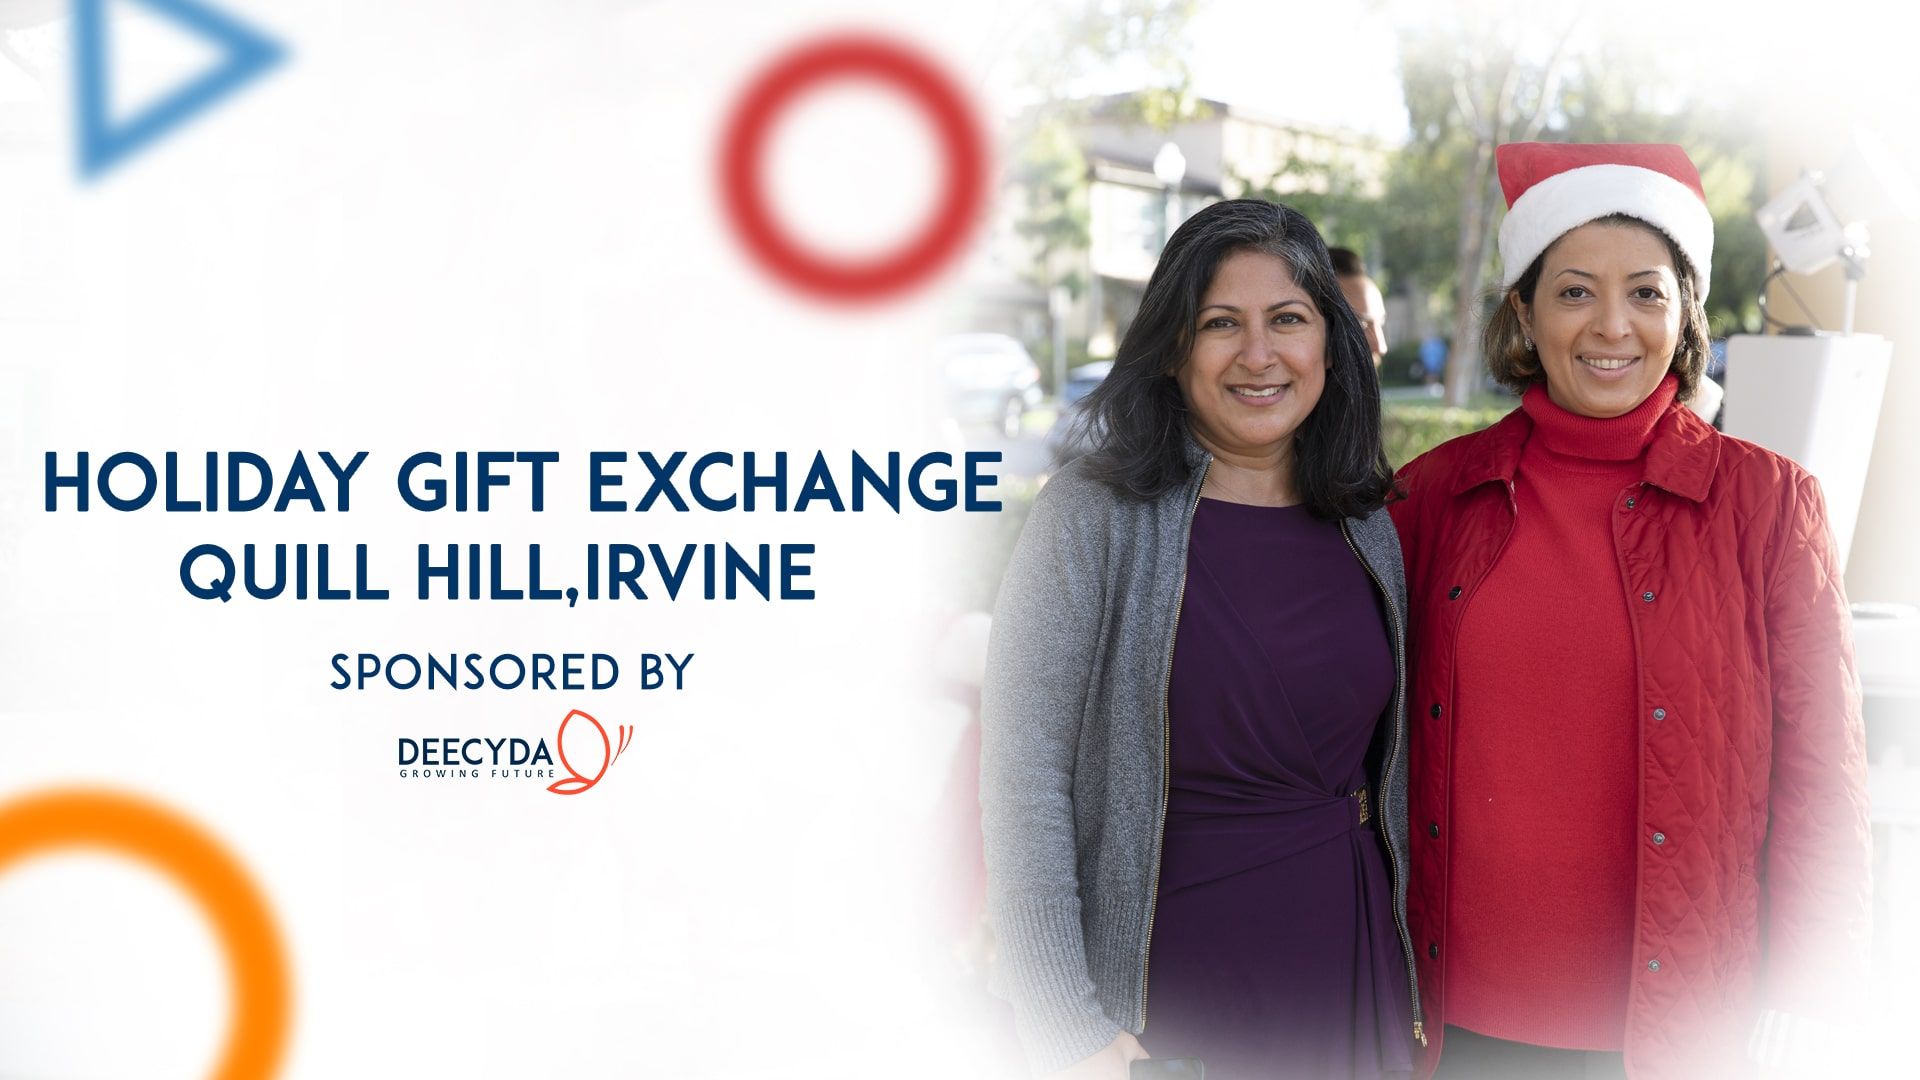 Quail Hill community gift exchange event 2022